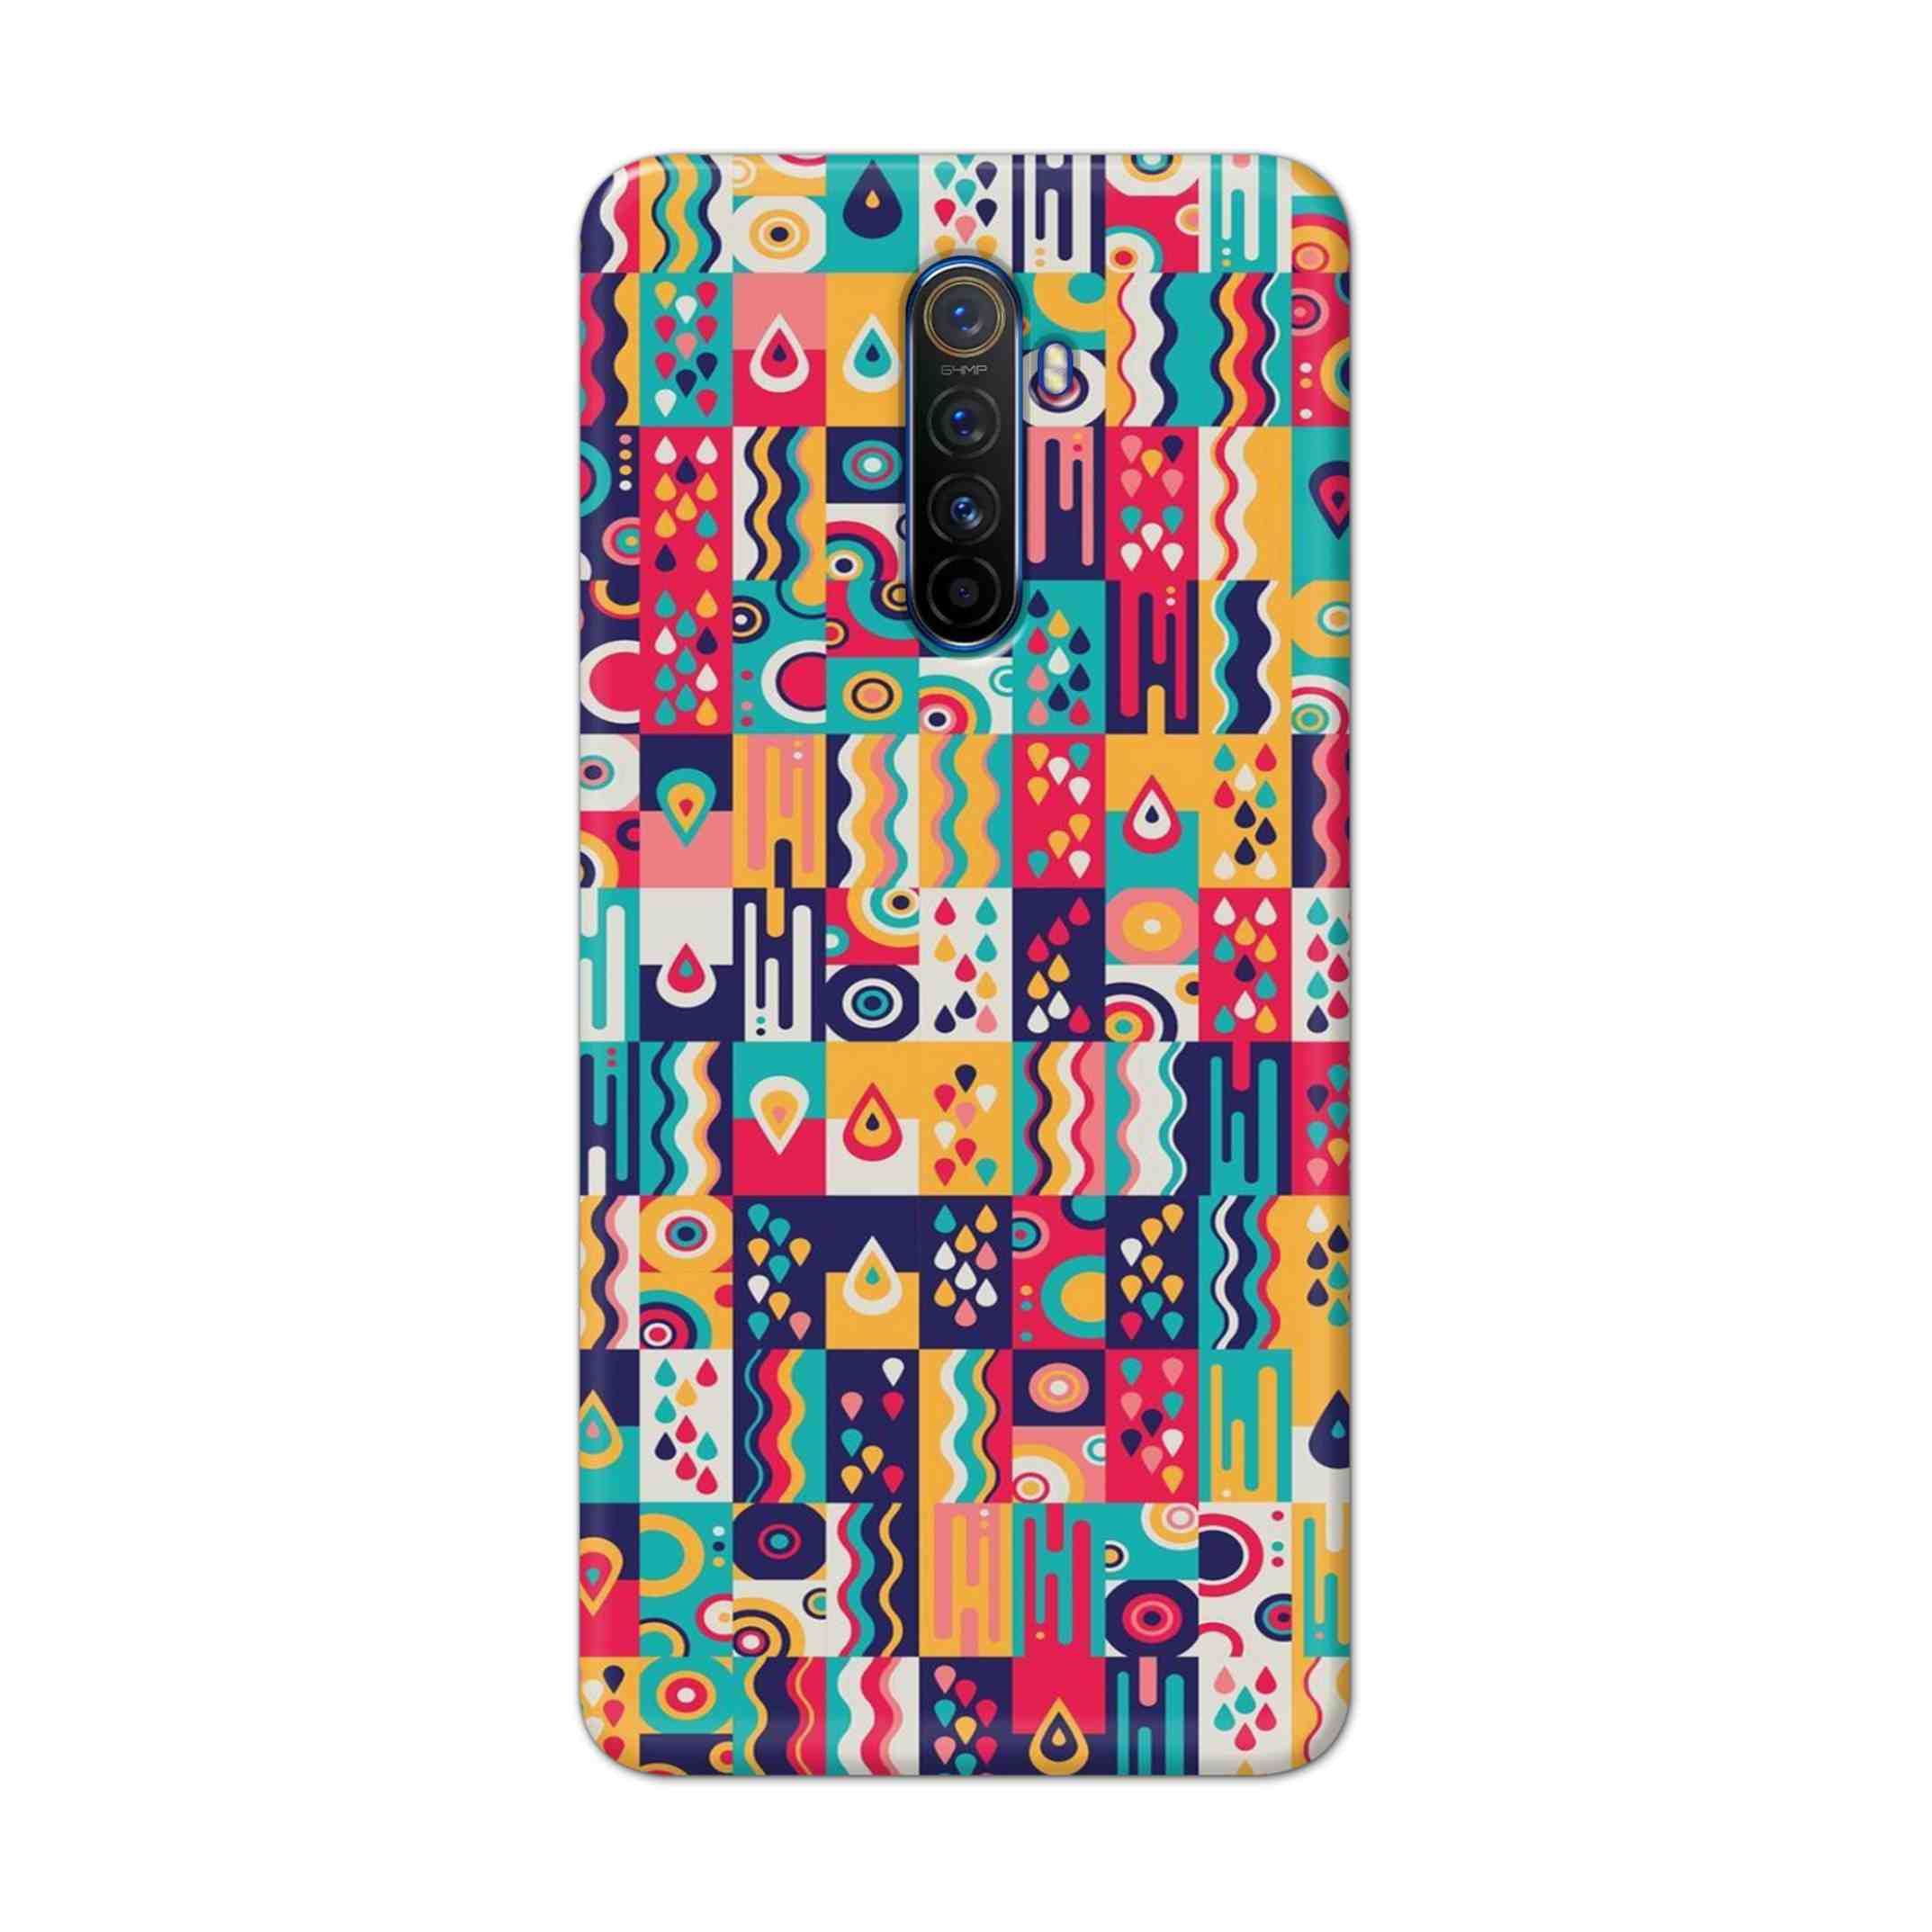 Buy Art Hard Back Mobile Phone Case Cover For Realme X2 Pro Online